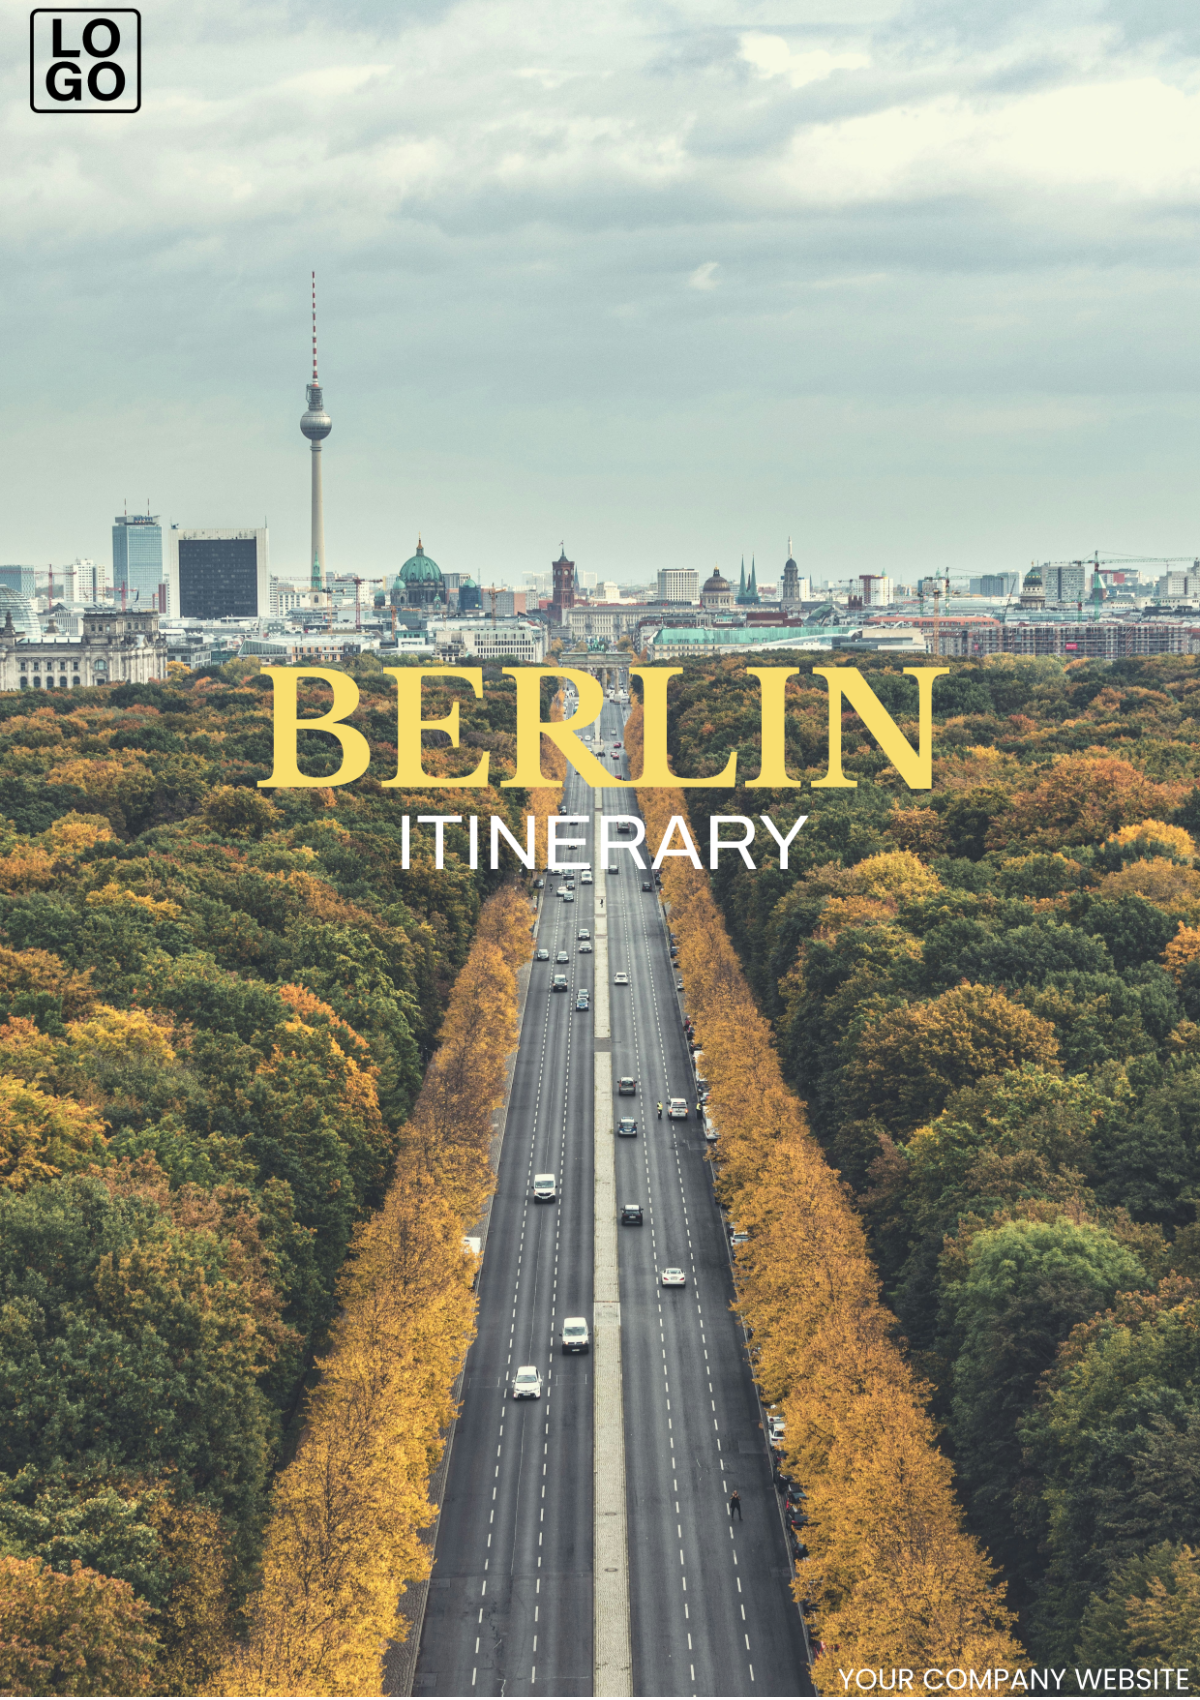 Berlin Weekend Itinerary Template